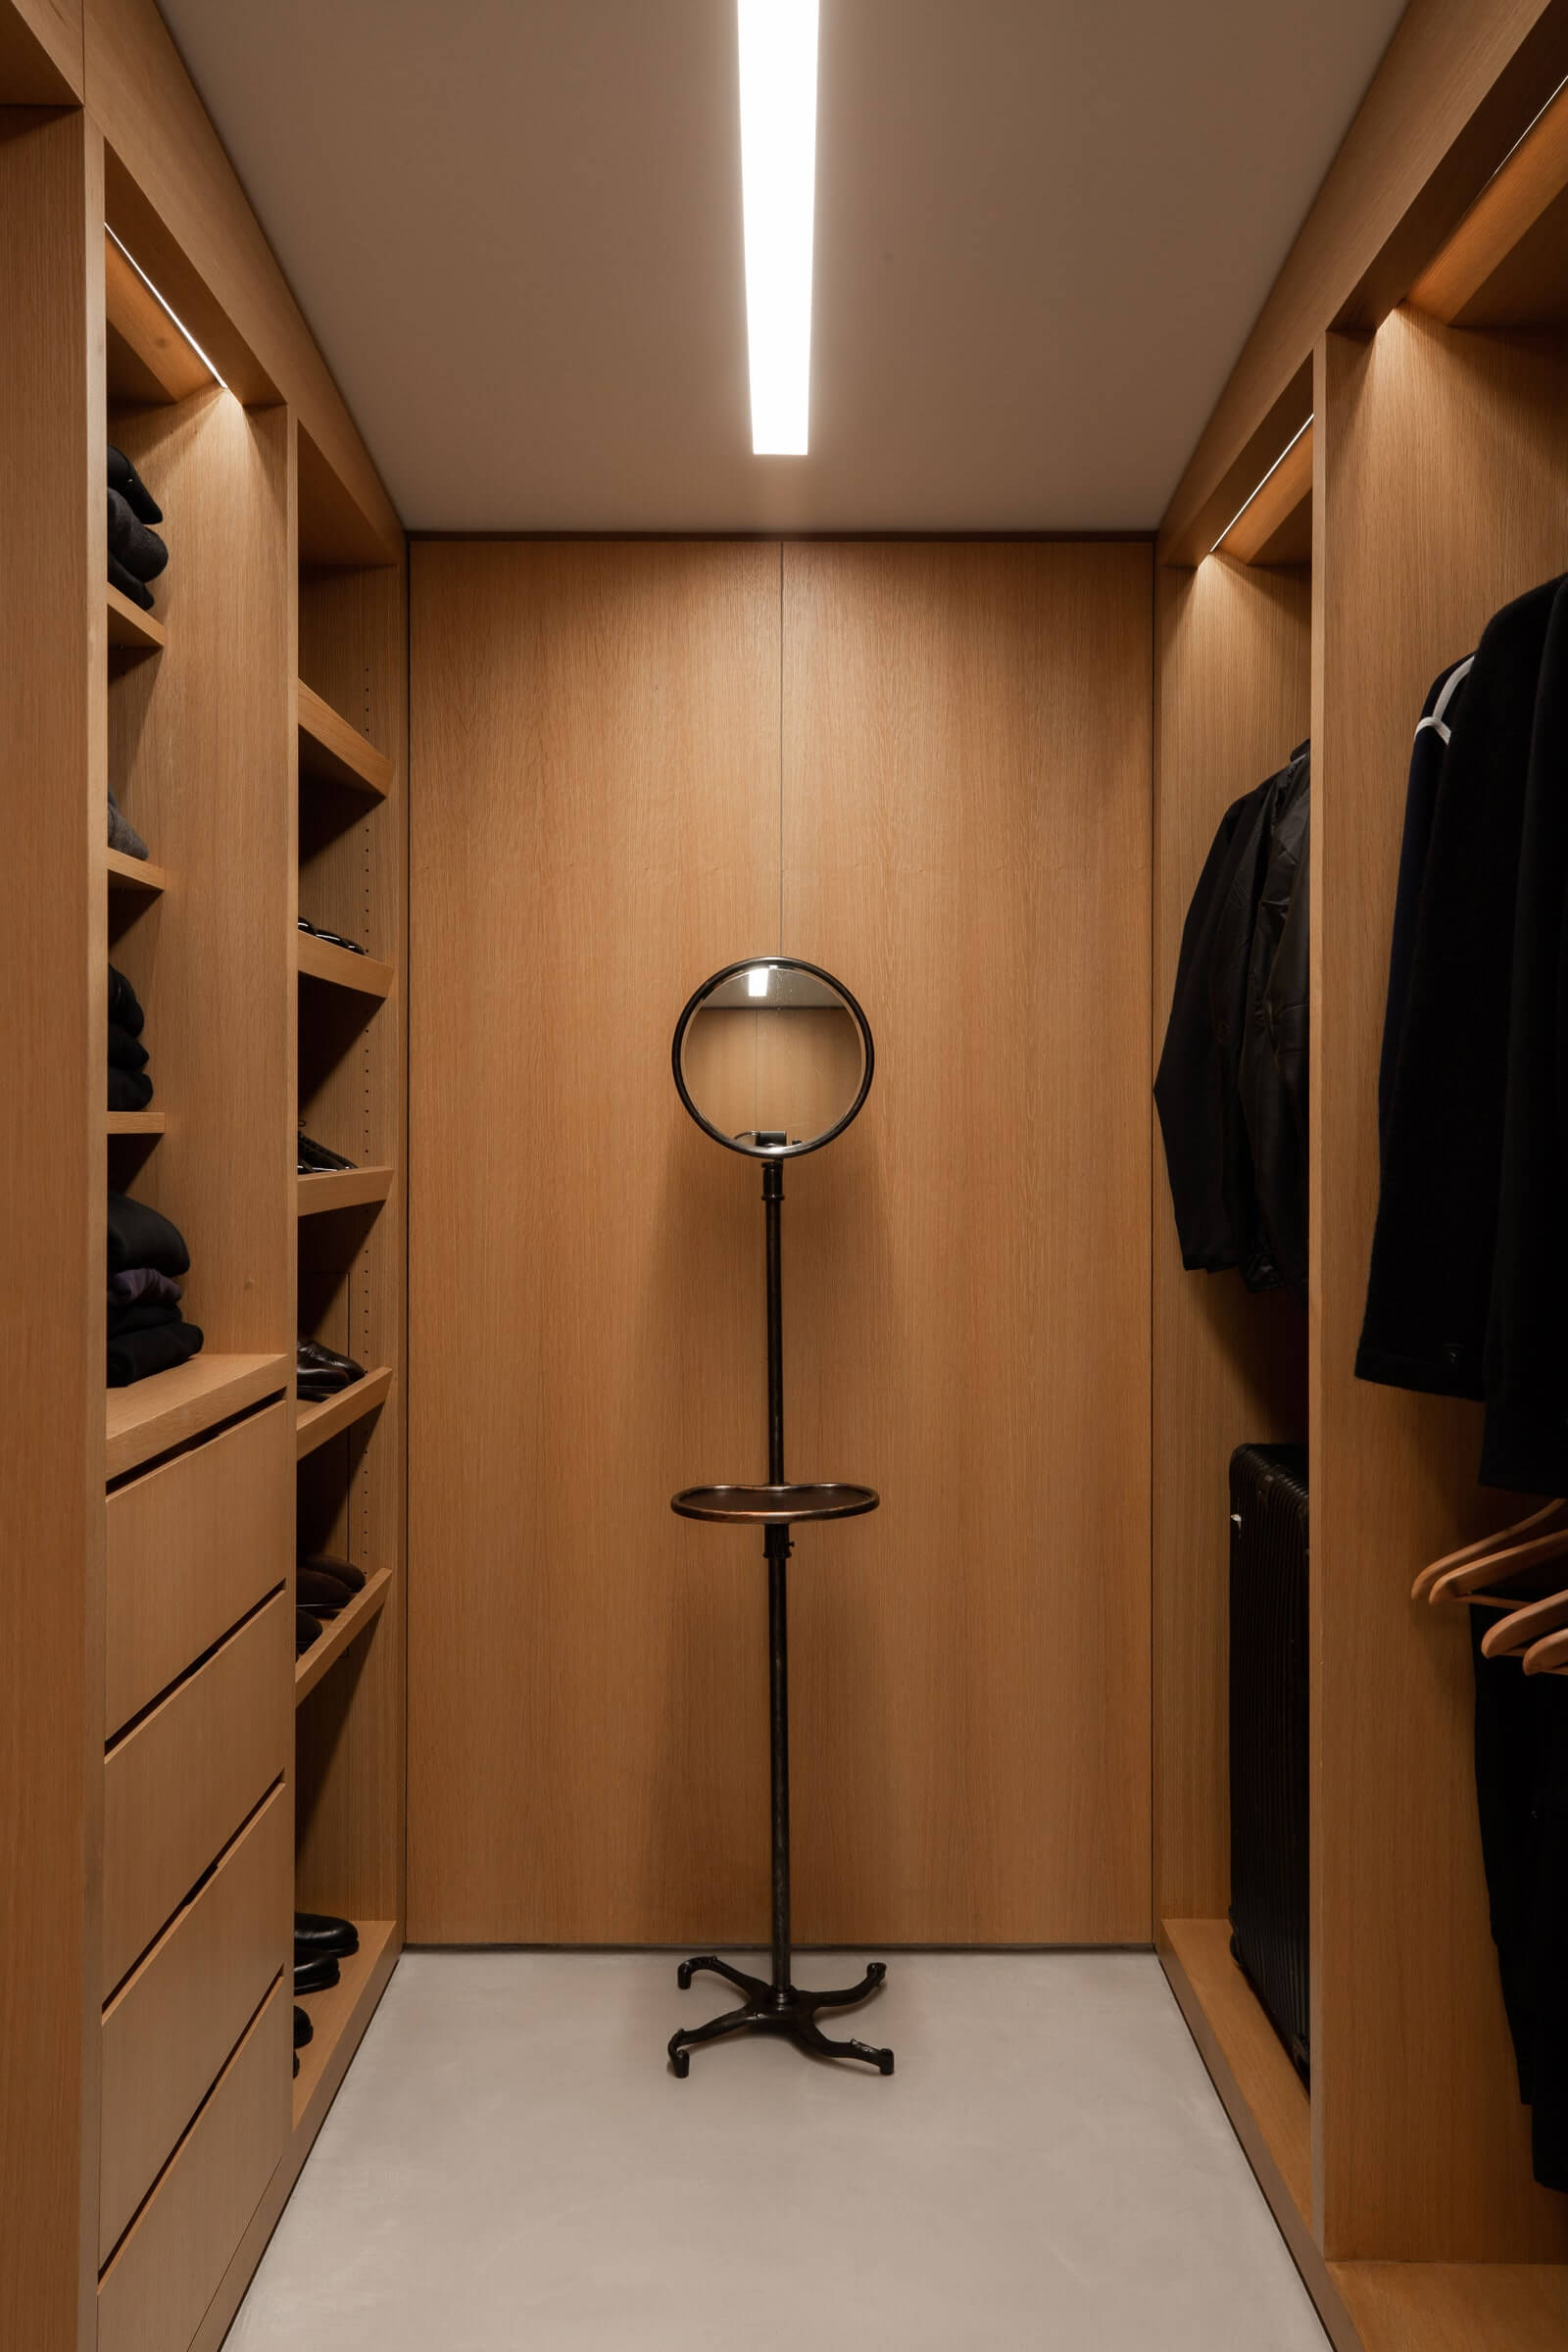 Celebrity closet design ideas - Janson Statham